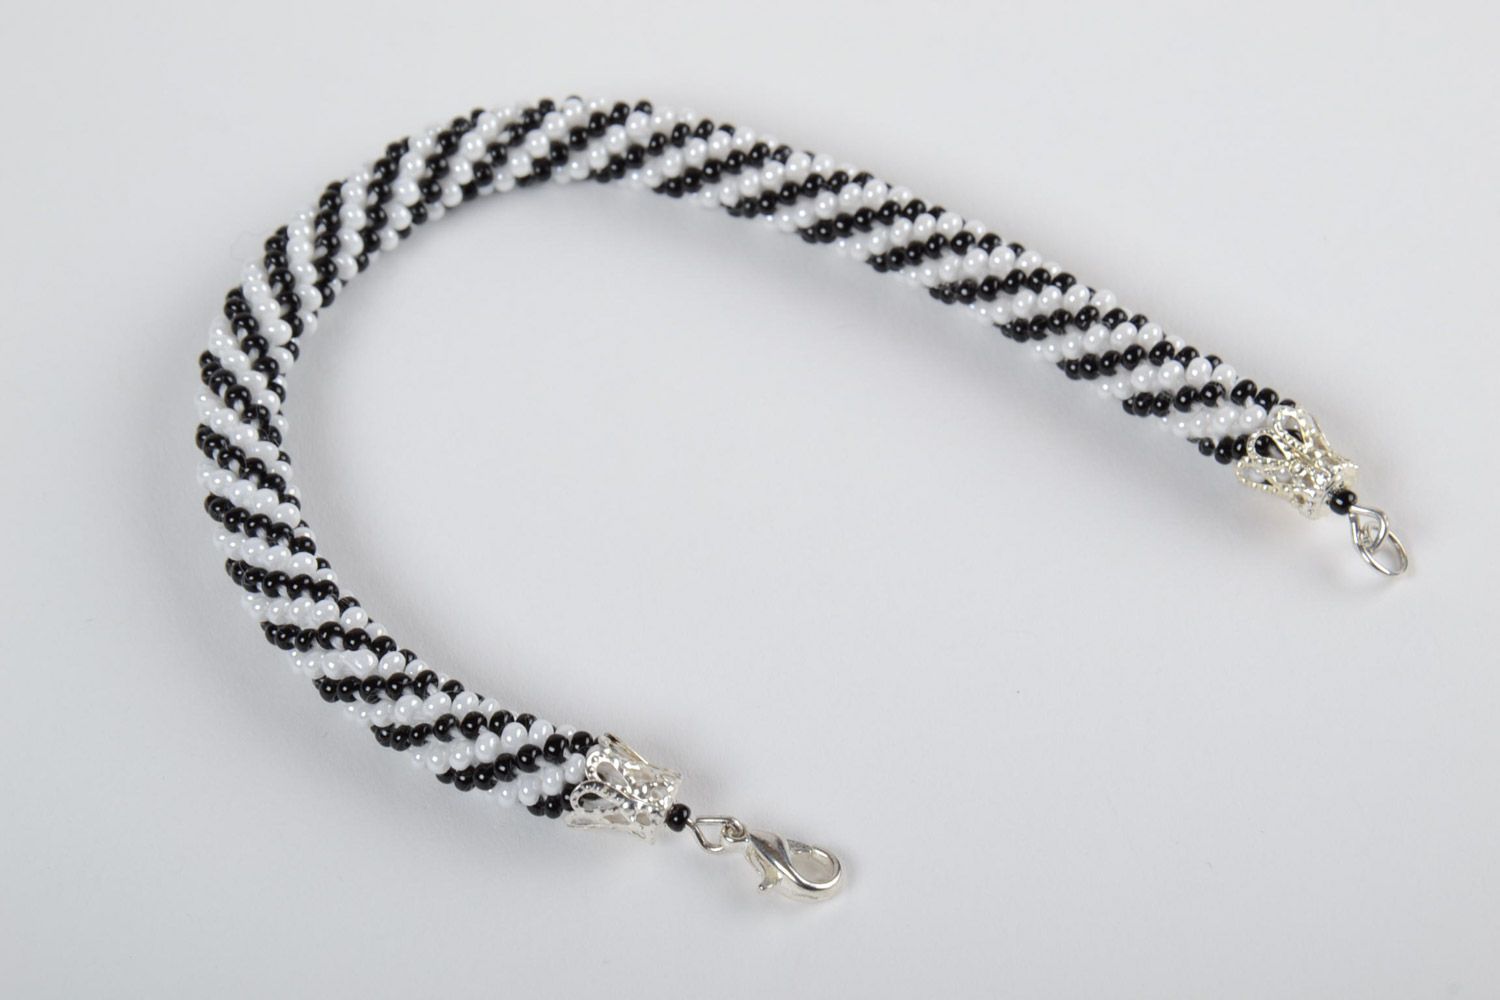 Handmade beautiful wrist bracelet made of Czech beads black and white for women photo 4